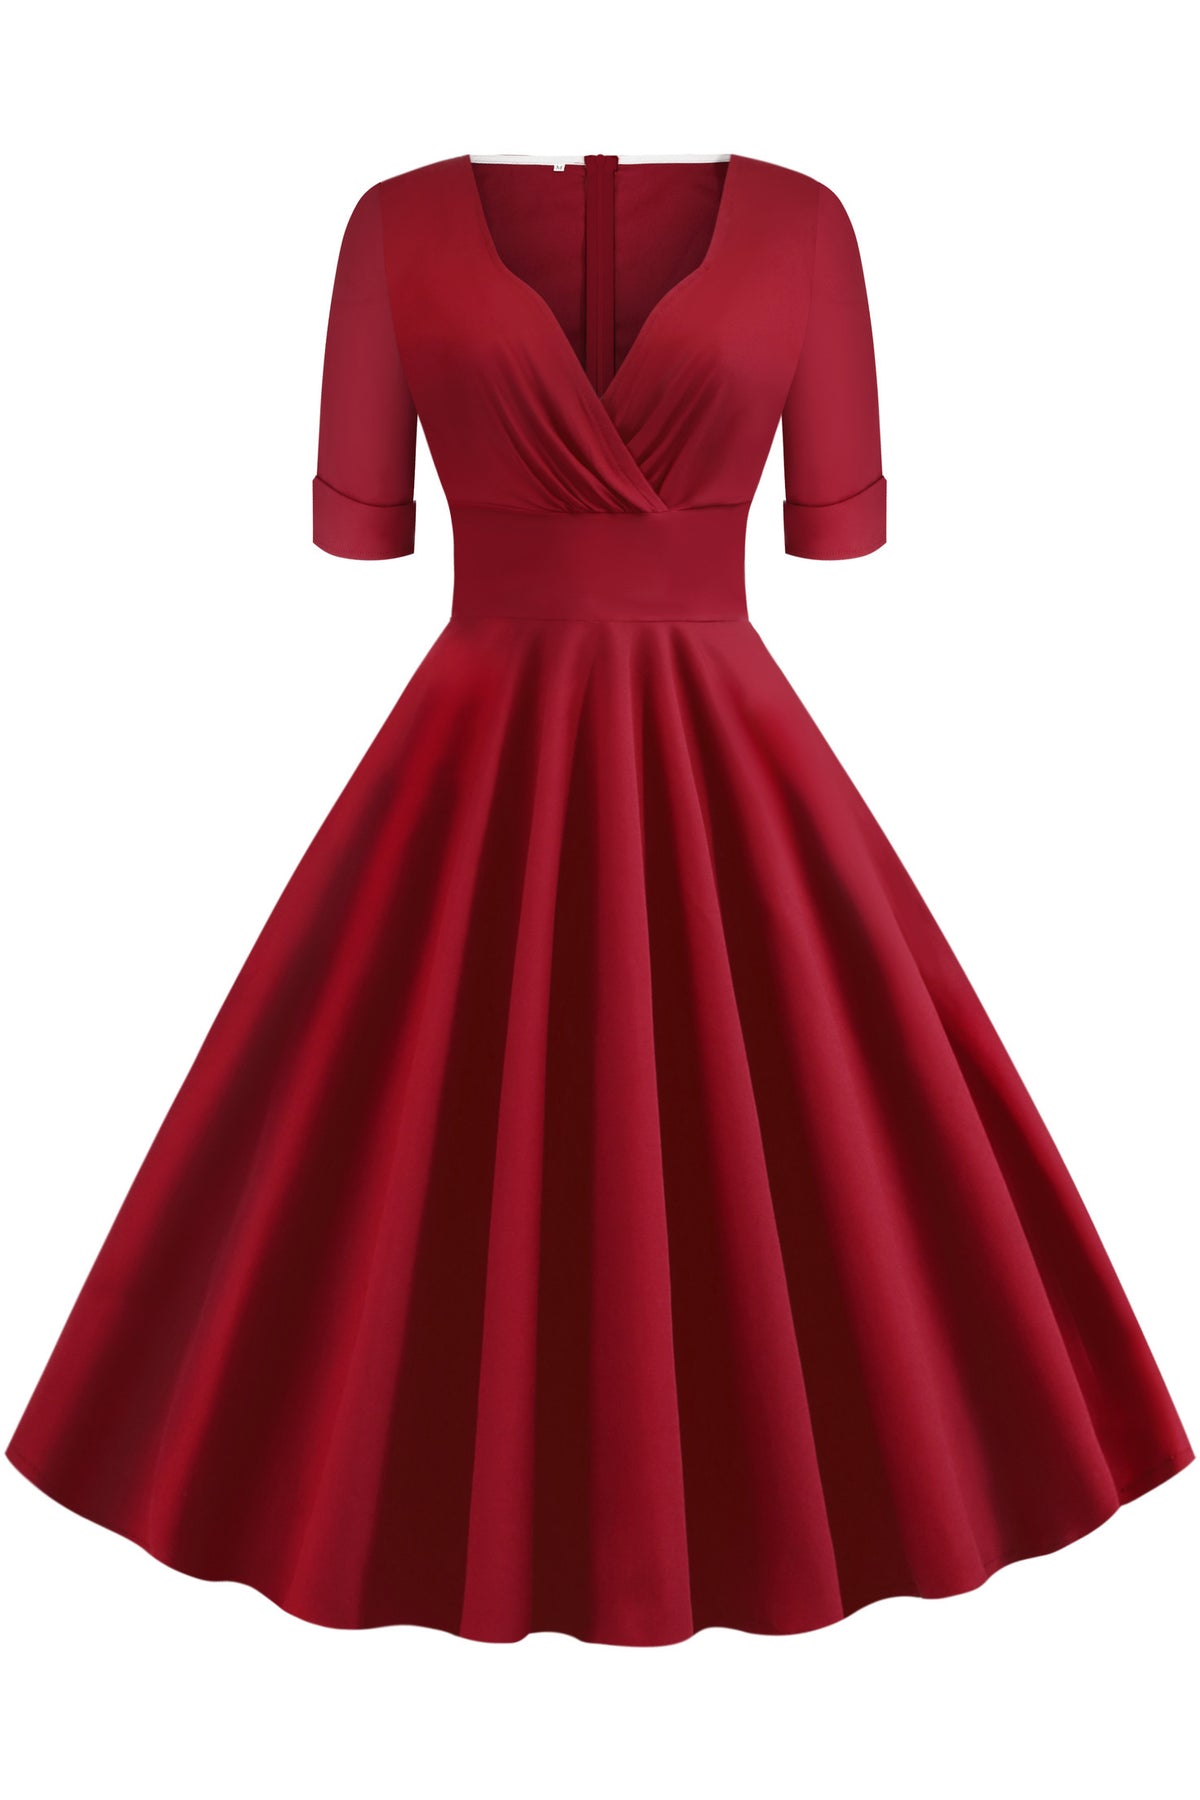 Red Surplice A-line Short Sleeves Vintage Dress